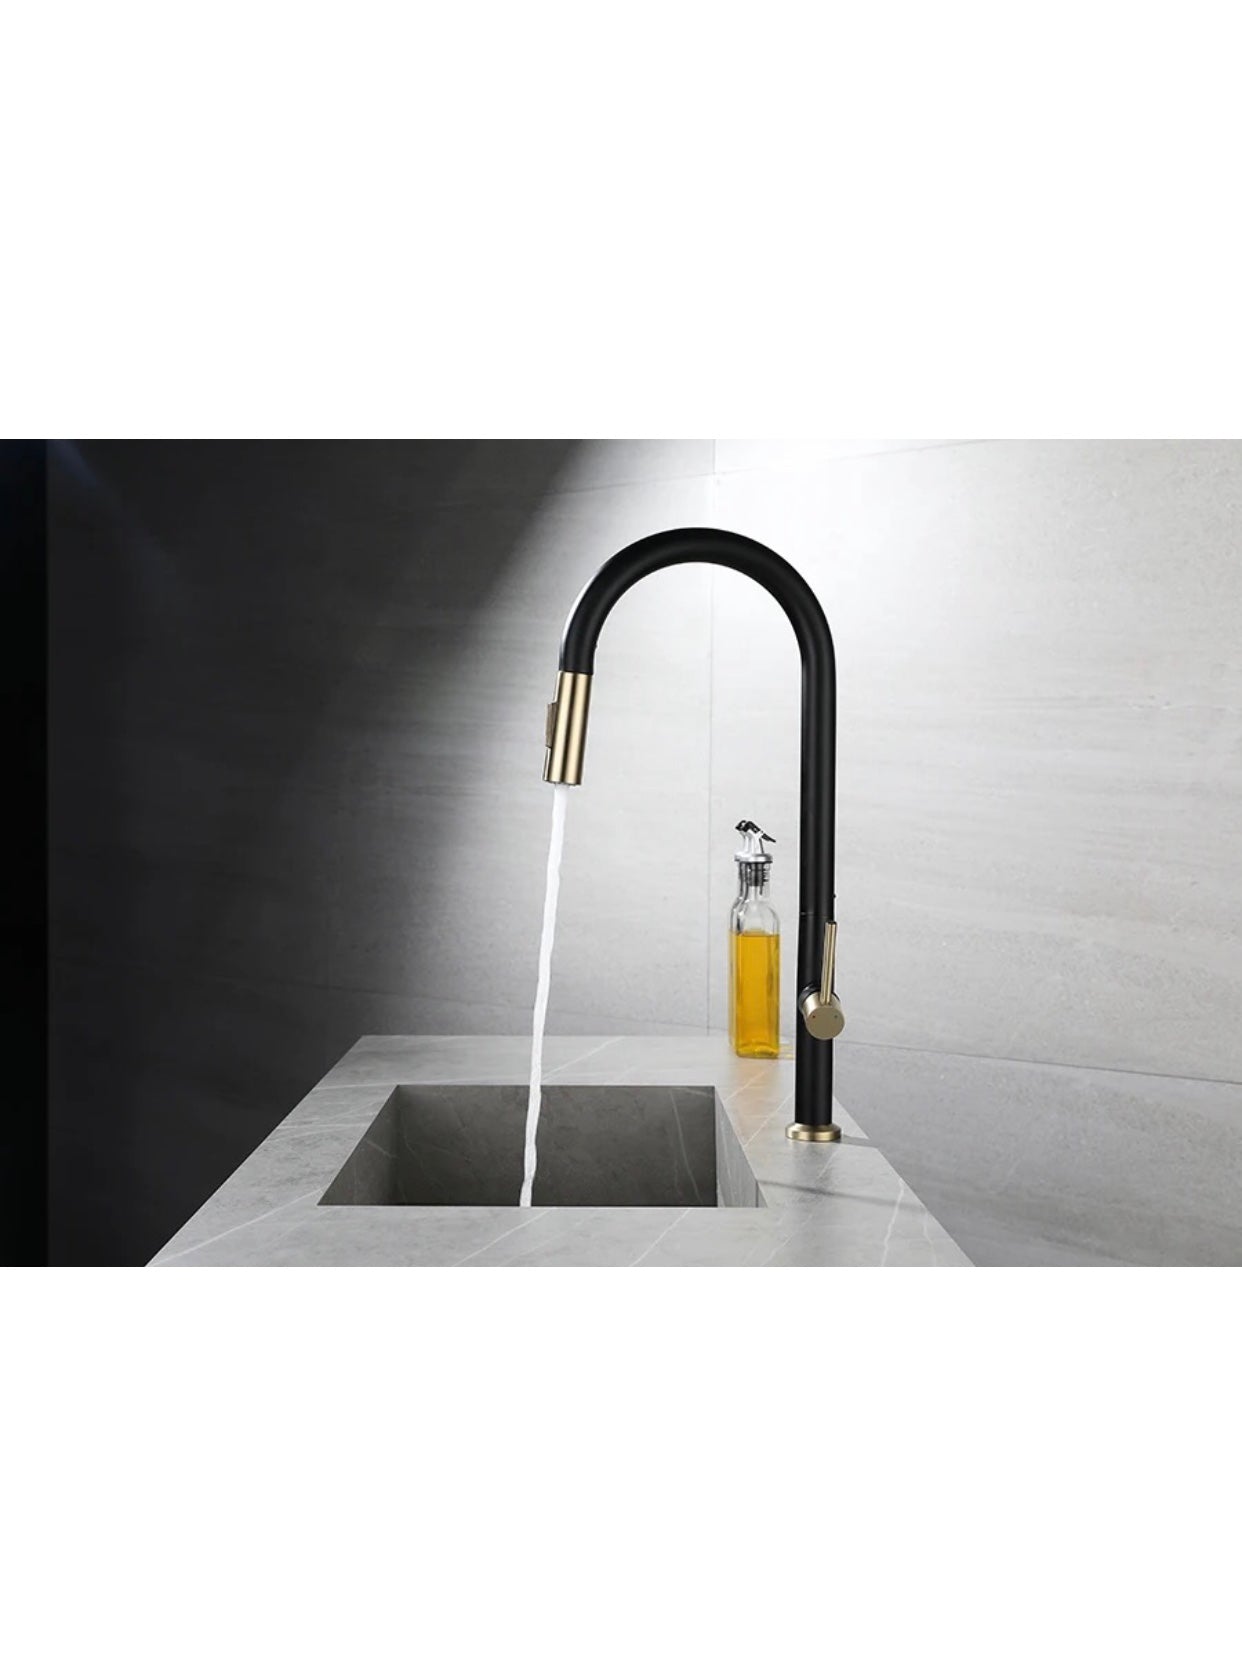 A|M Aquae Luxury 360 degree swivel spout kitchen sink faucet steel single handle pull down kitchen faucet